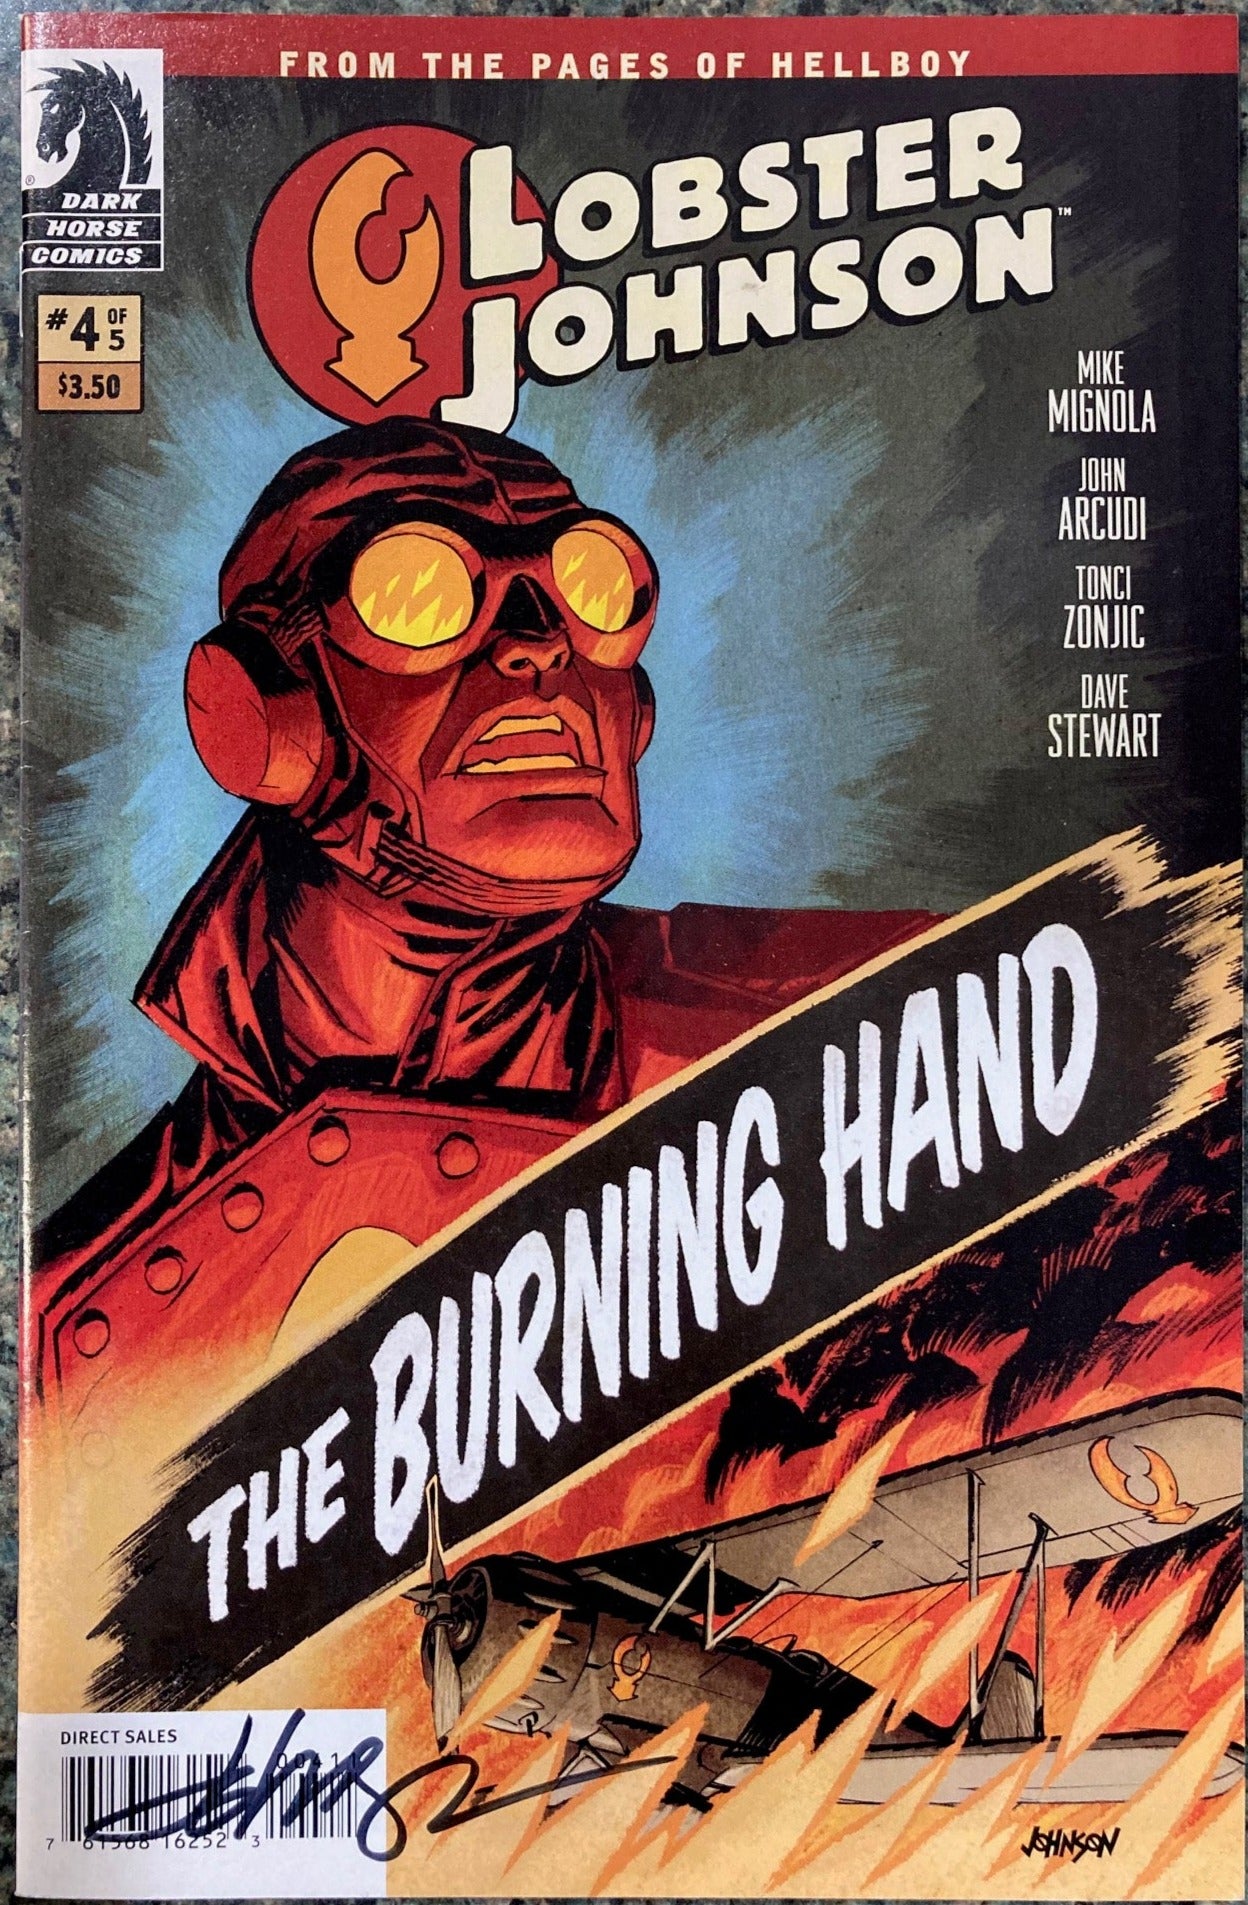 Lobster Johnson: Burning Hand #4 - Signed